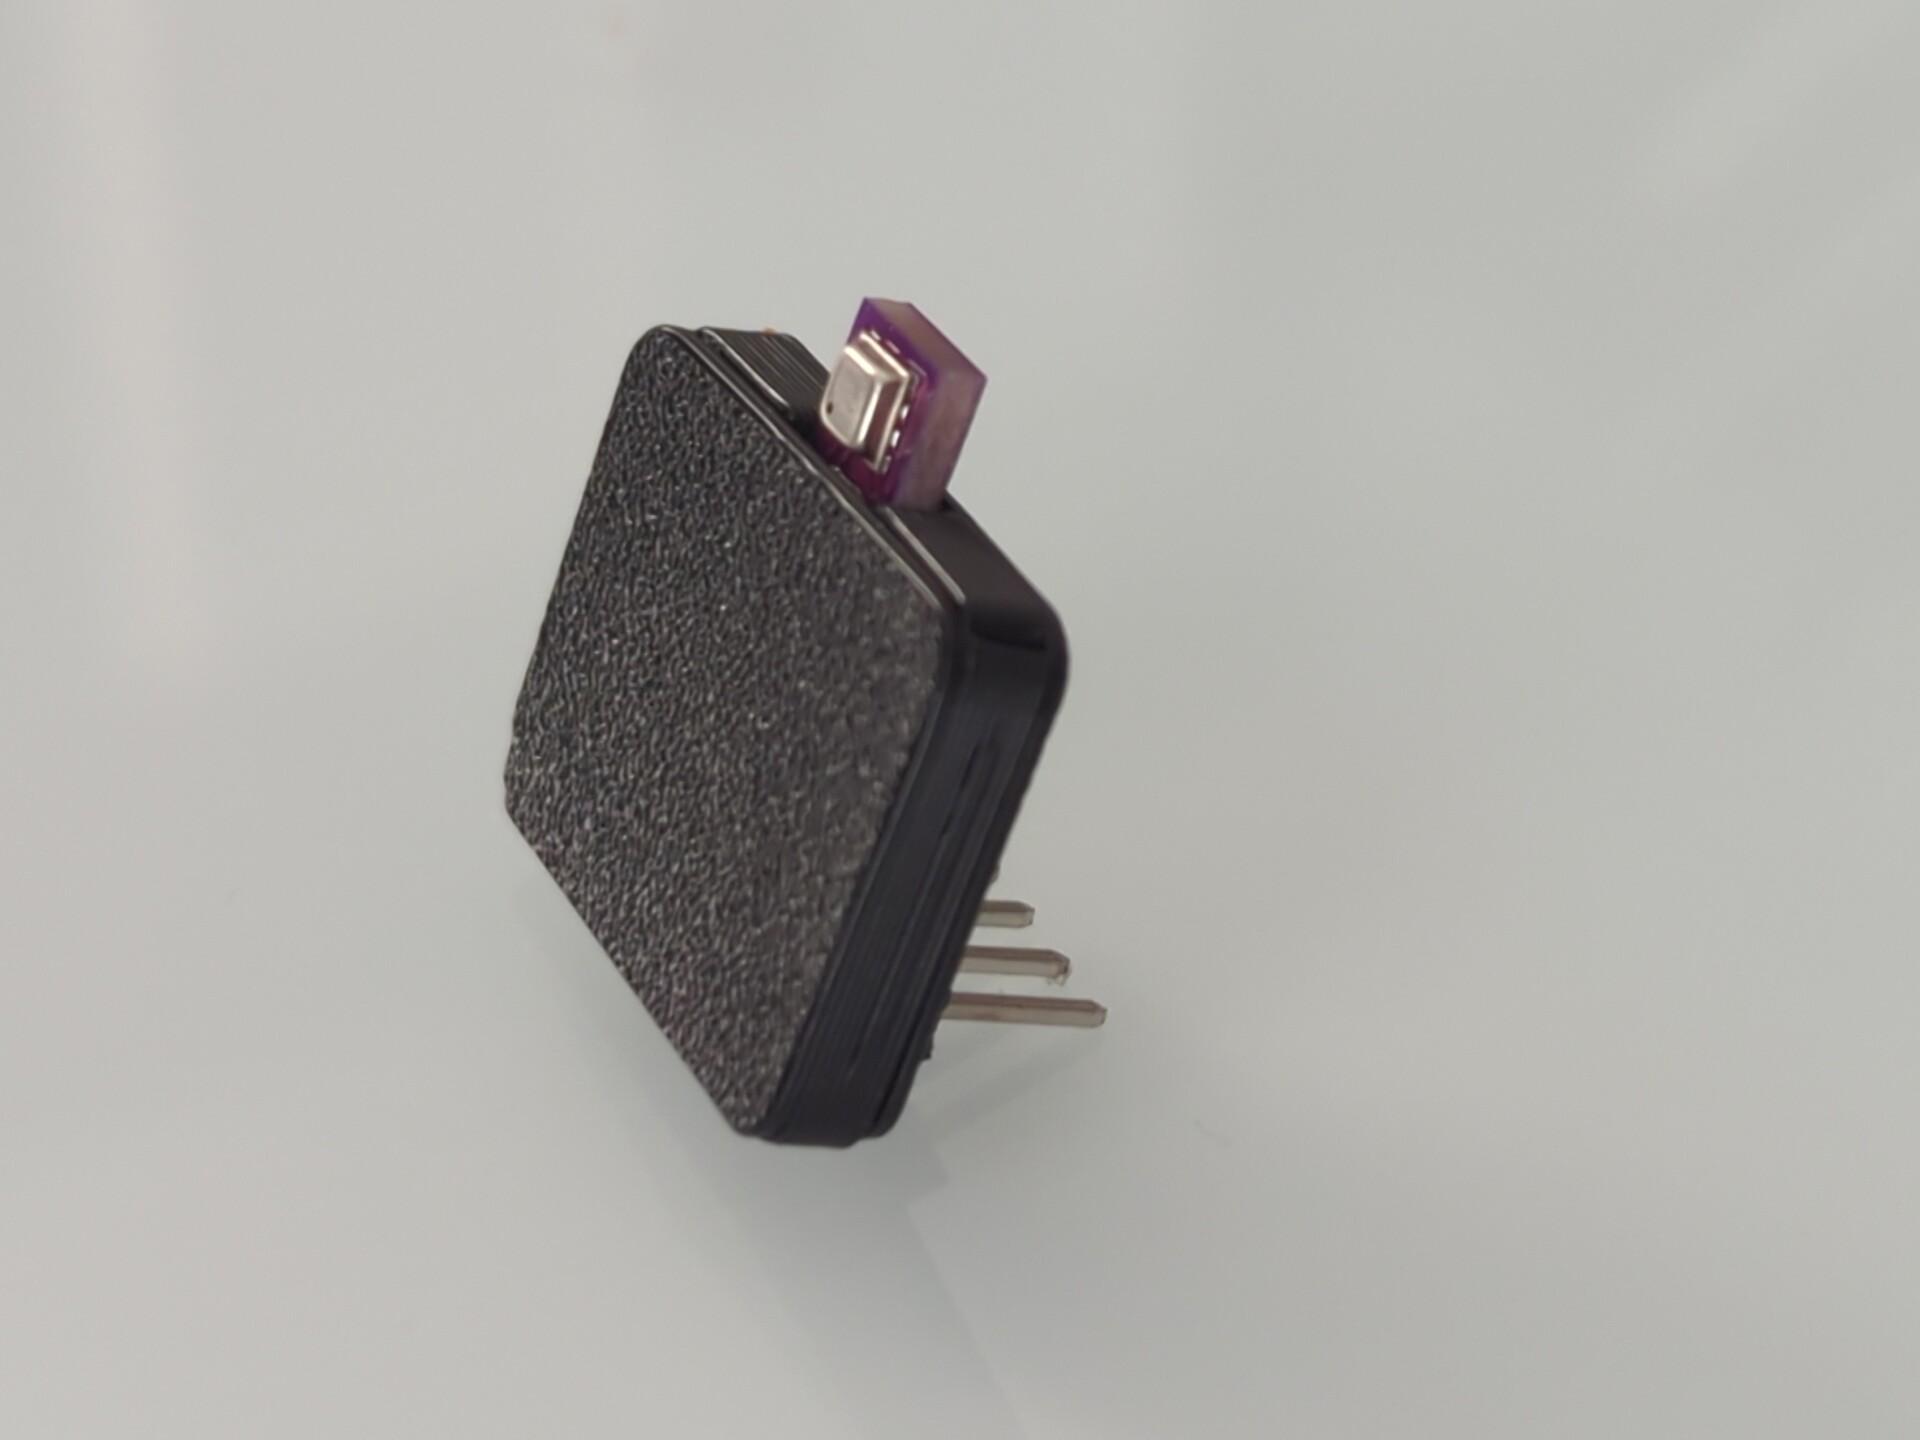 Slim Case for BME680 Sensor 3d model